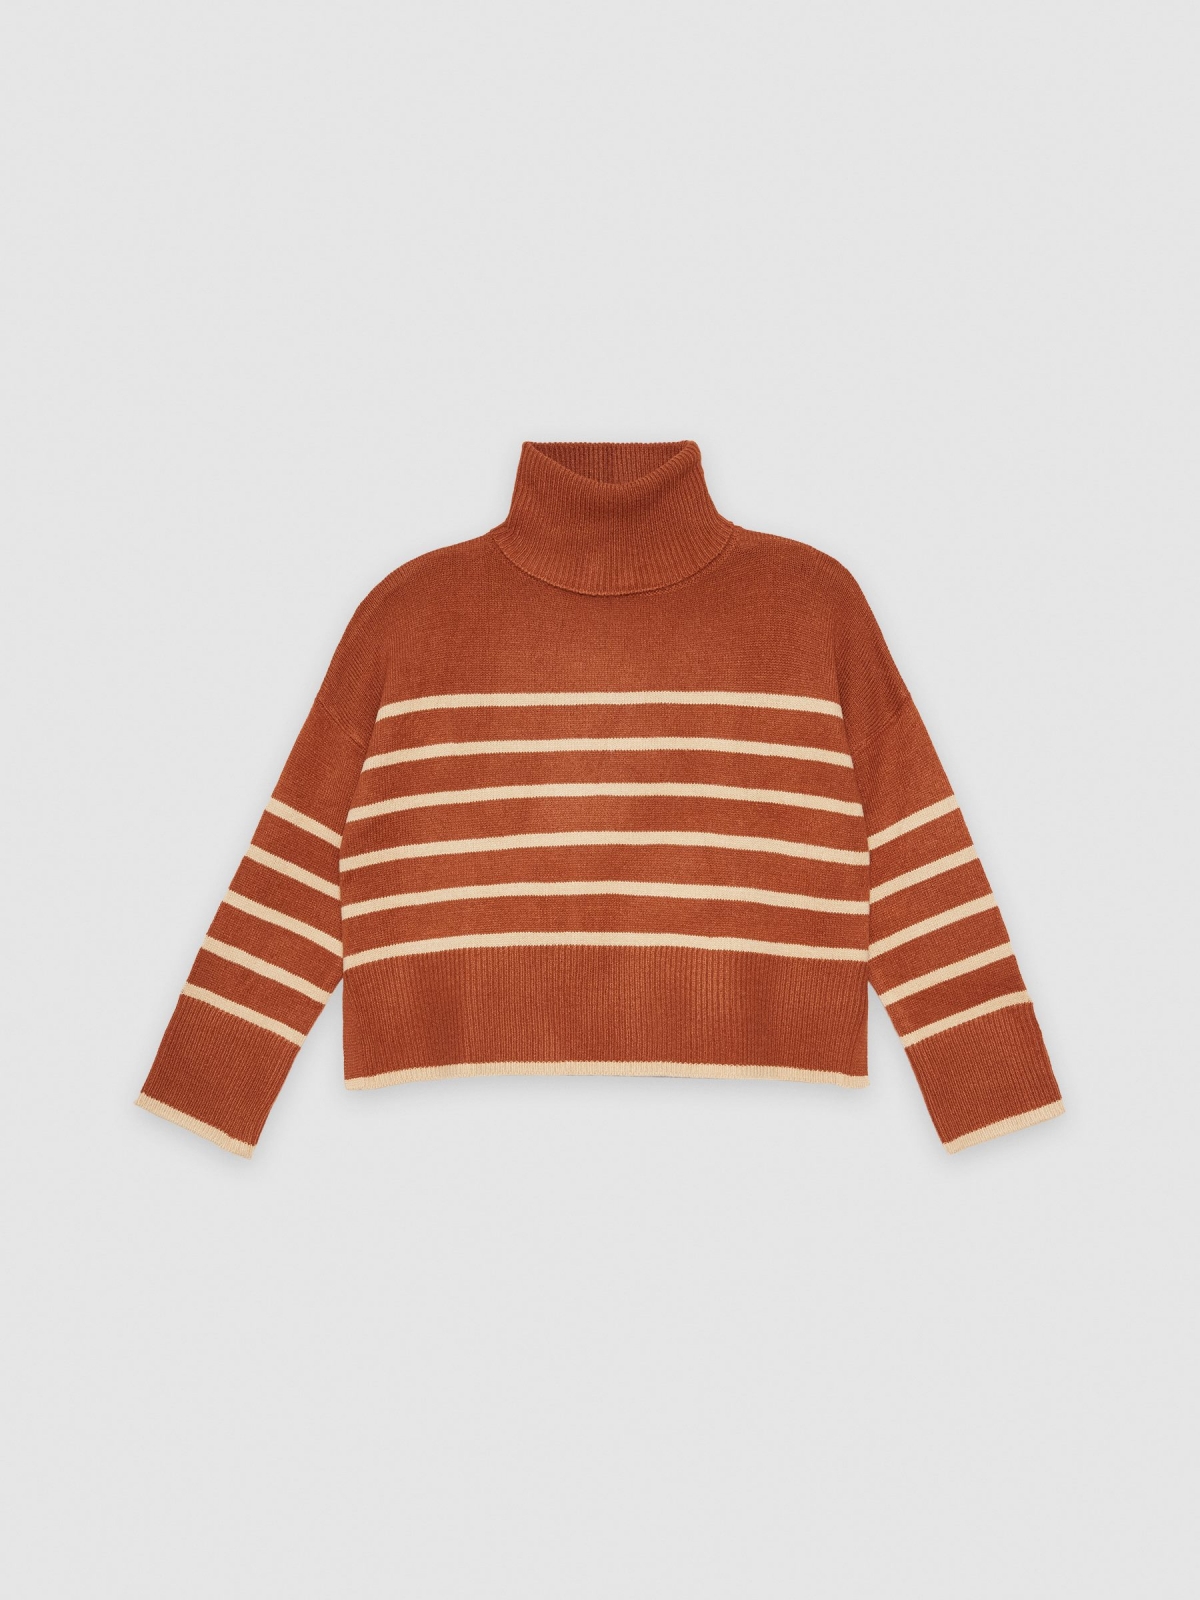  Turtleneck crop sweater brown